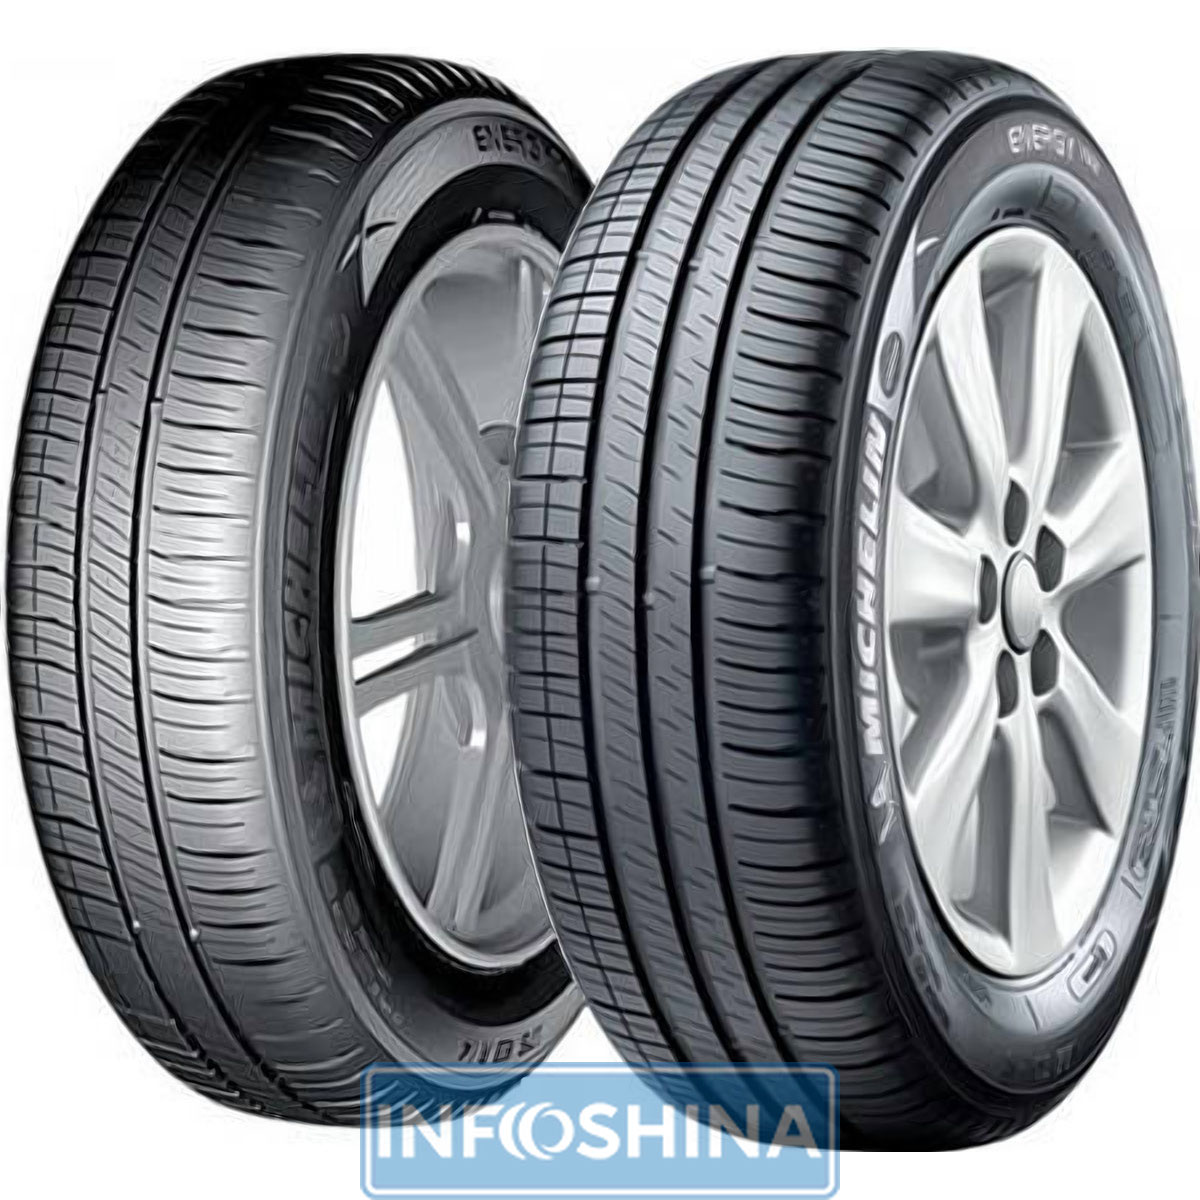 Купить шины Michelin Energy XM2 155/80 R13 79T